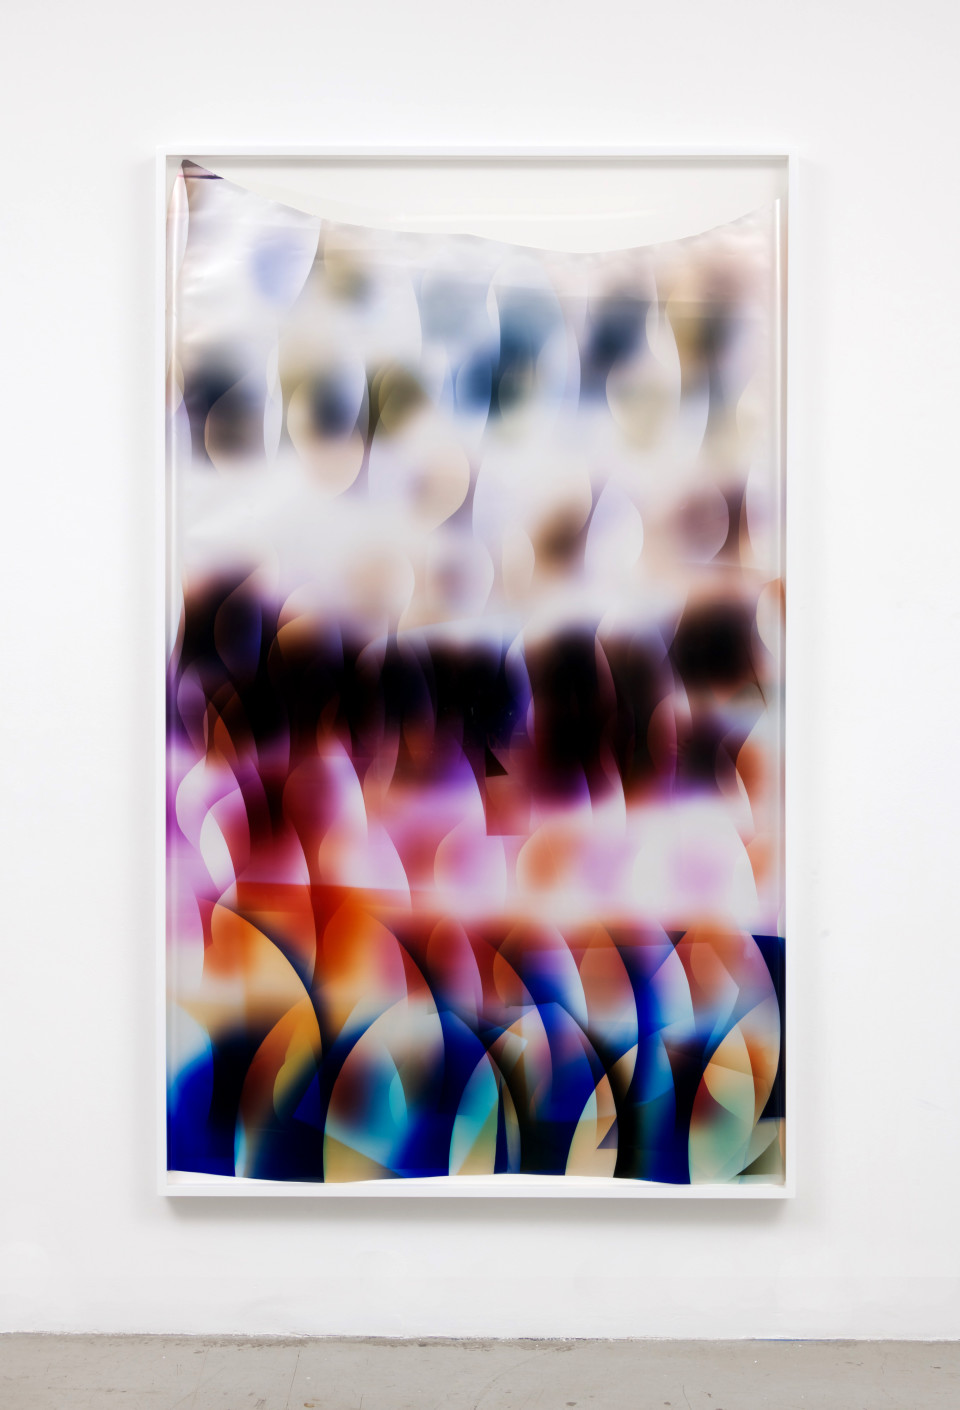 Image: Mariah Robertson  168, 2017  unique chromogenic print  80 1/2 x 49 inches (204.5 x 124.5 cm)